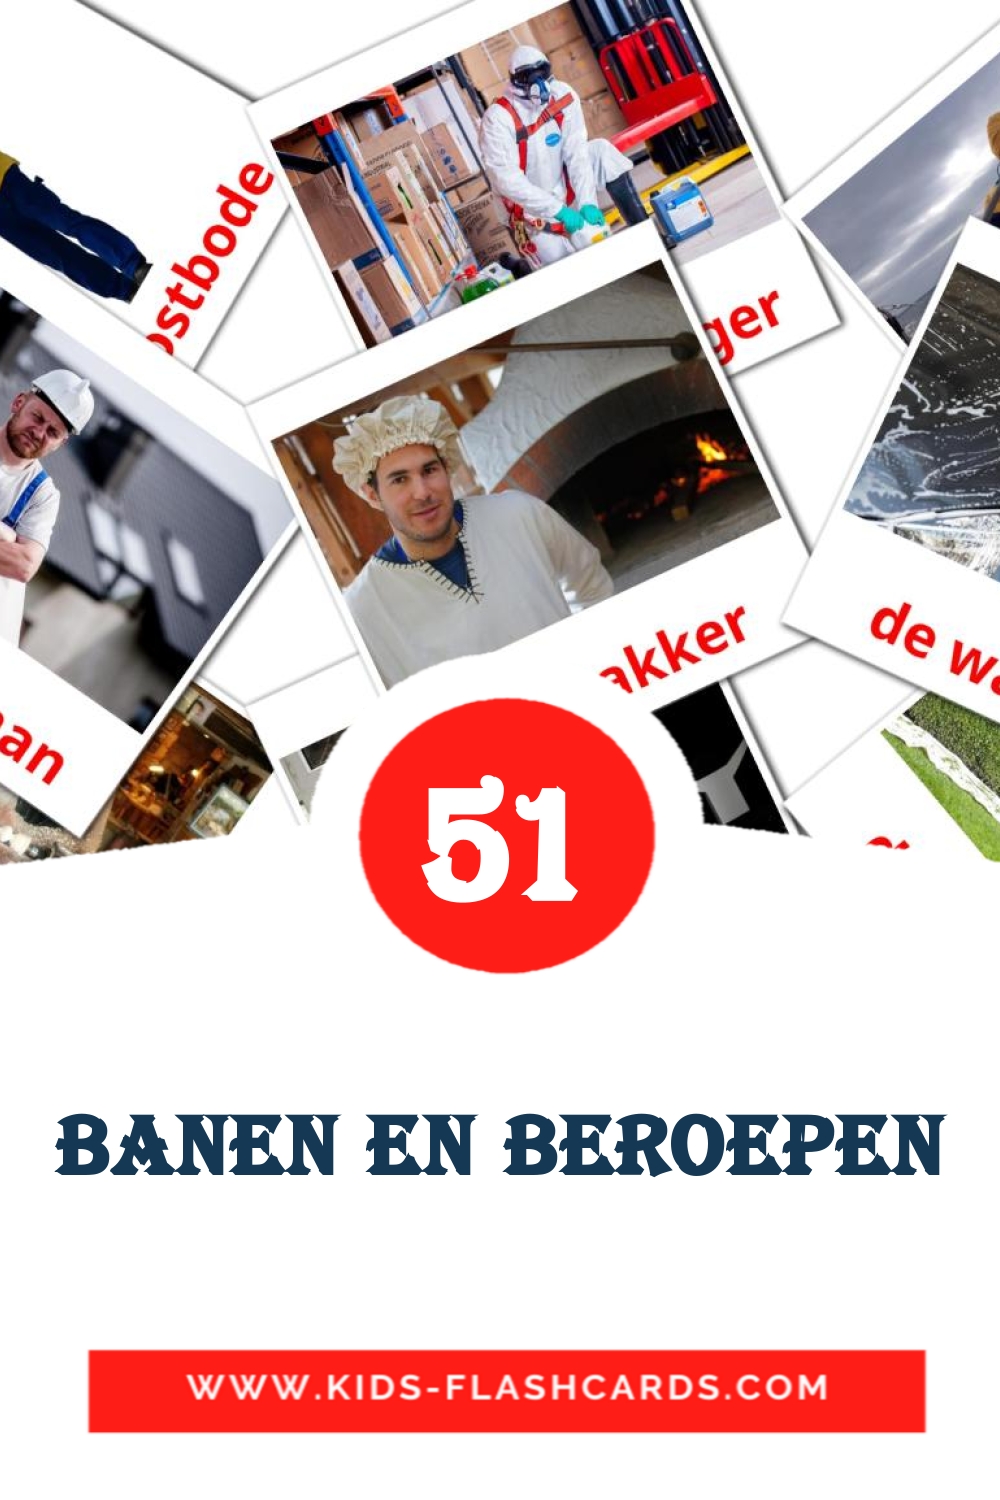 51 tarjetas didacticas de Banen en beroepen para el jardín de infancia en holandés